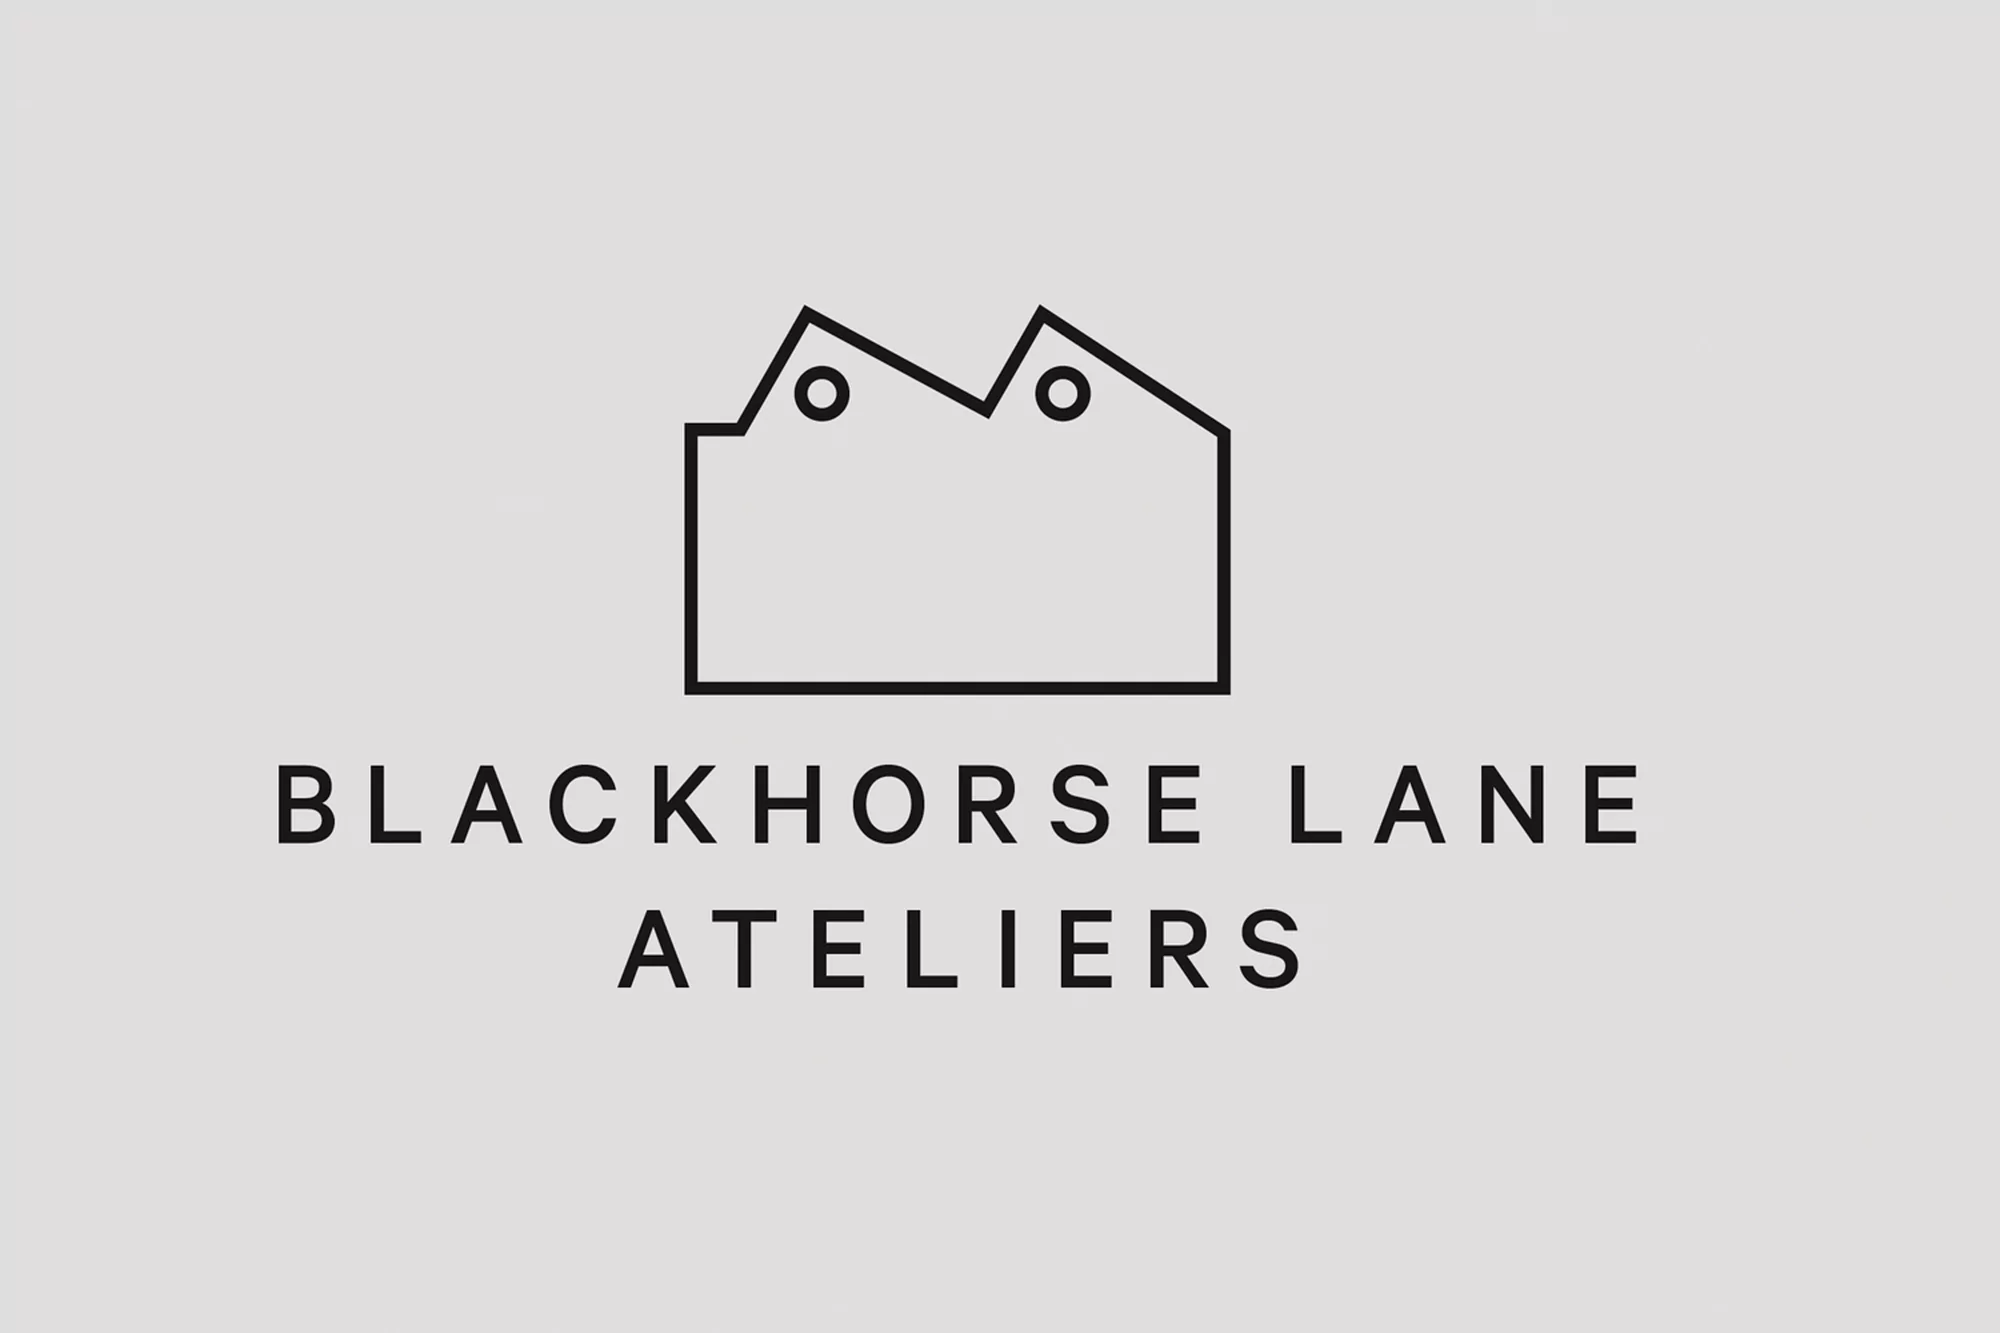 Blackhorse Lane Ateliers by StudioSmall